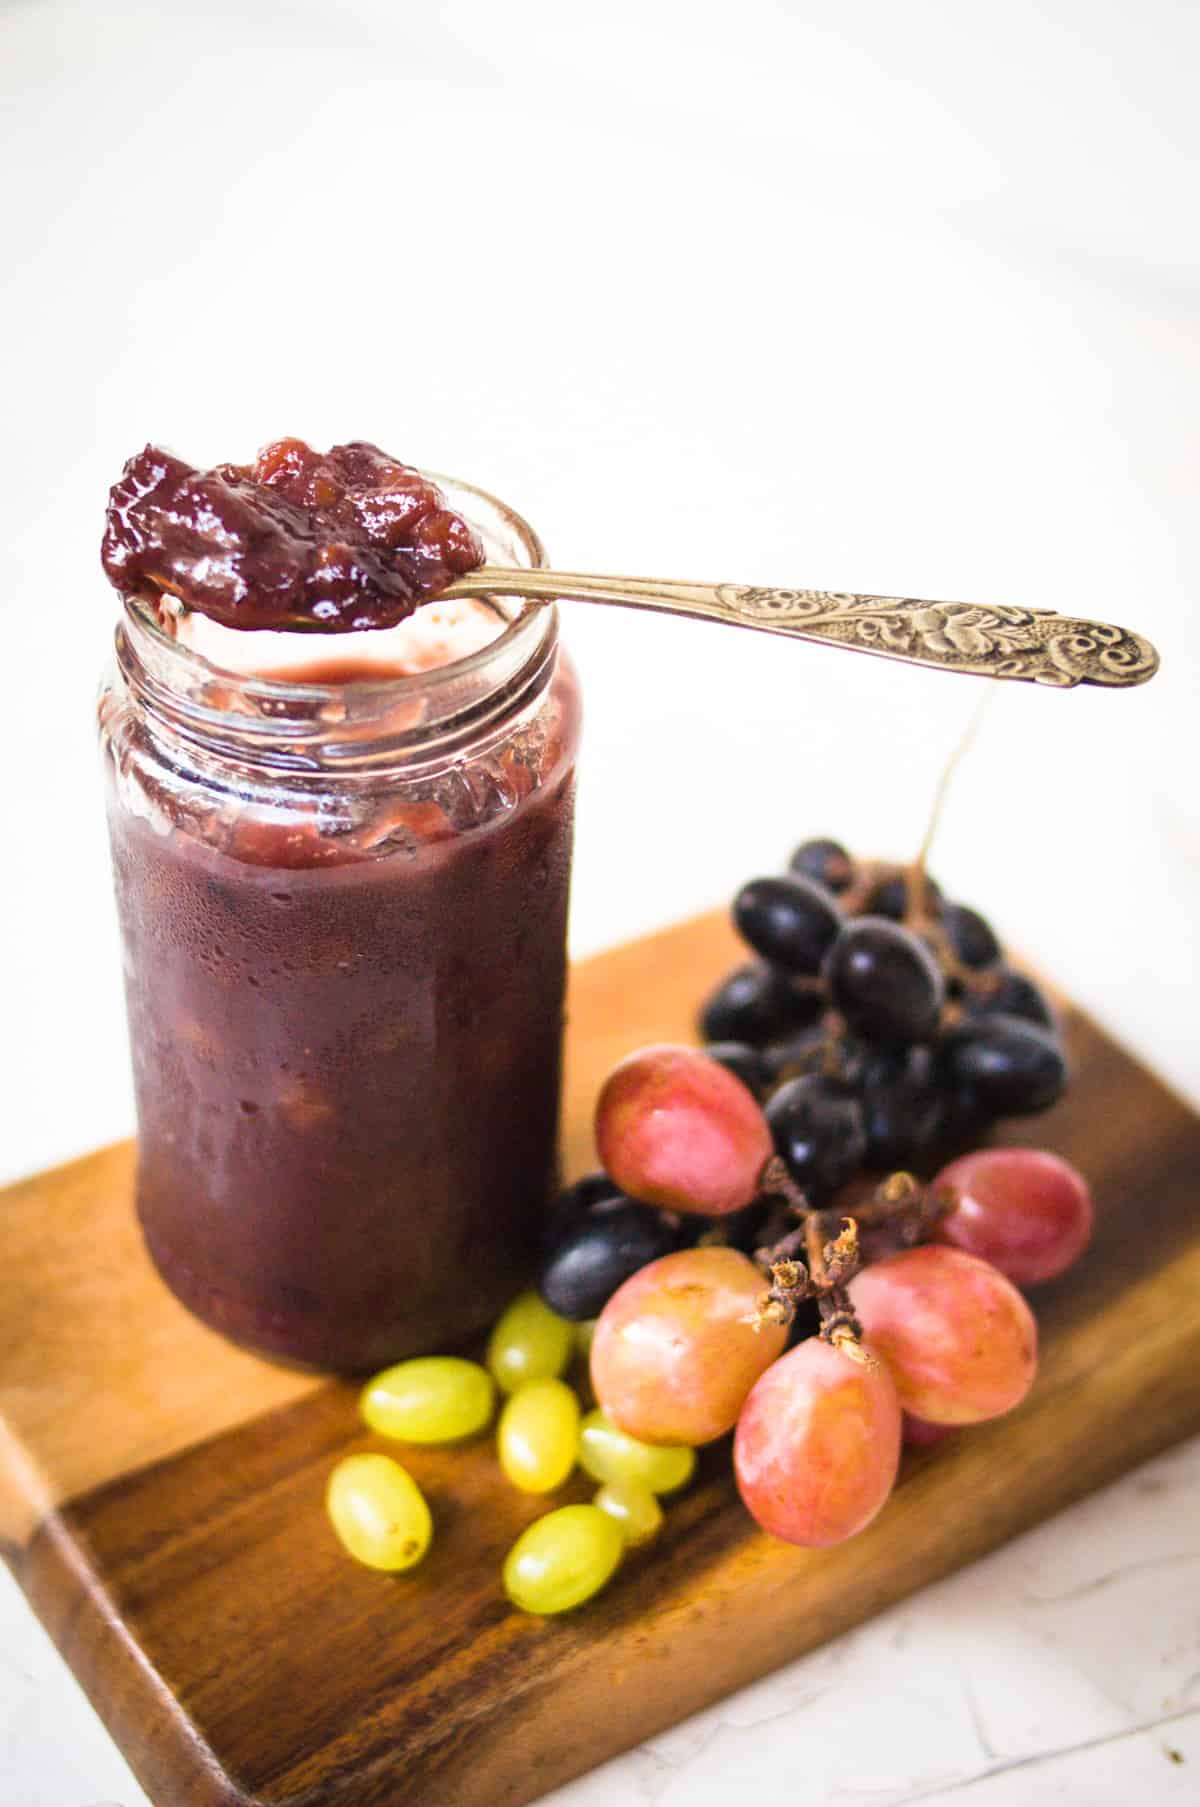 Concord grape jam in a jar.